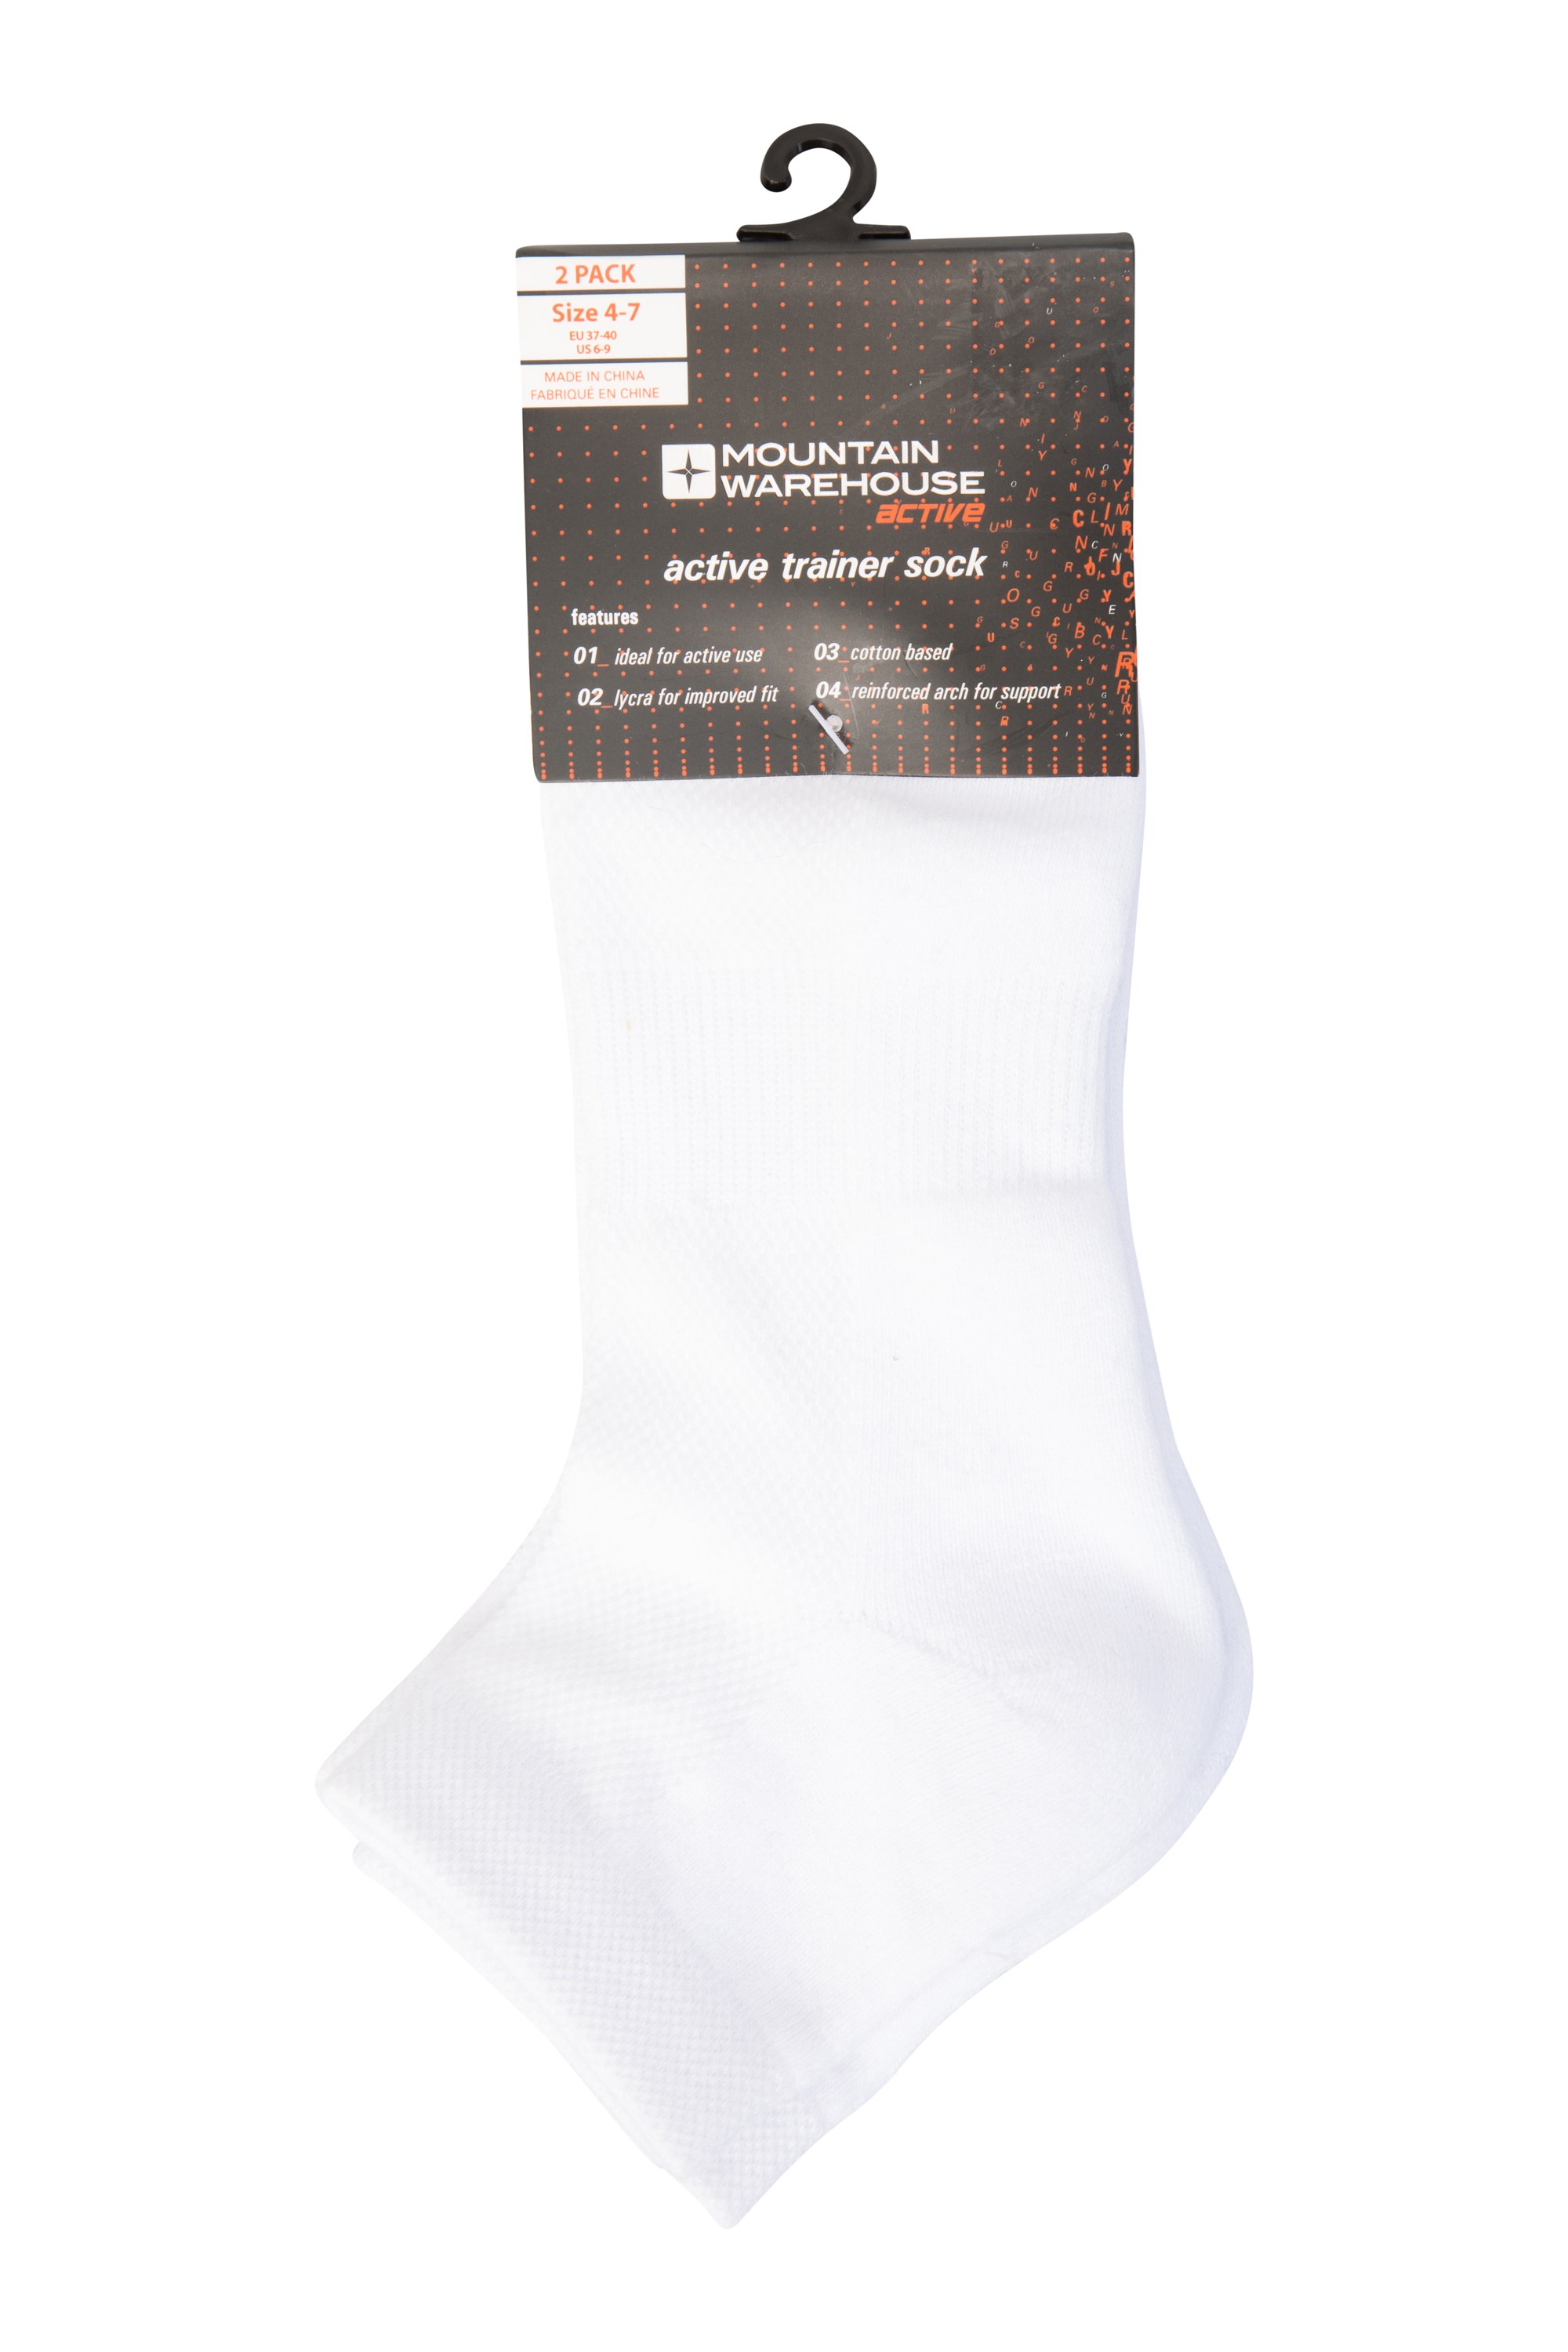 Mountain Warehouse Active Trainer Socks 2 Pack White